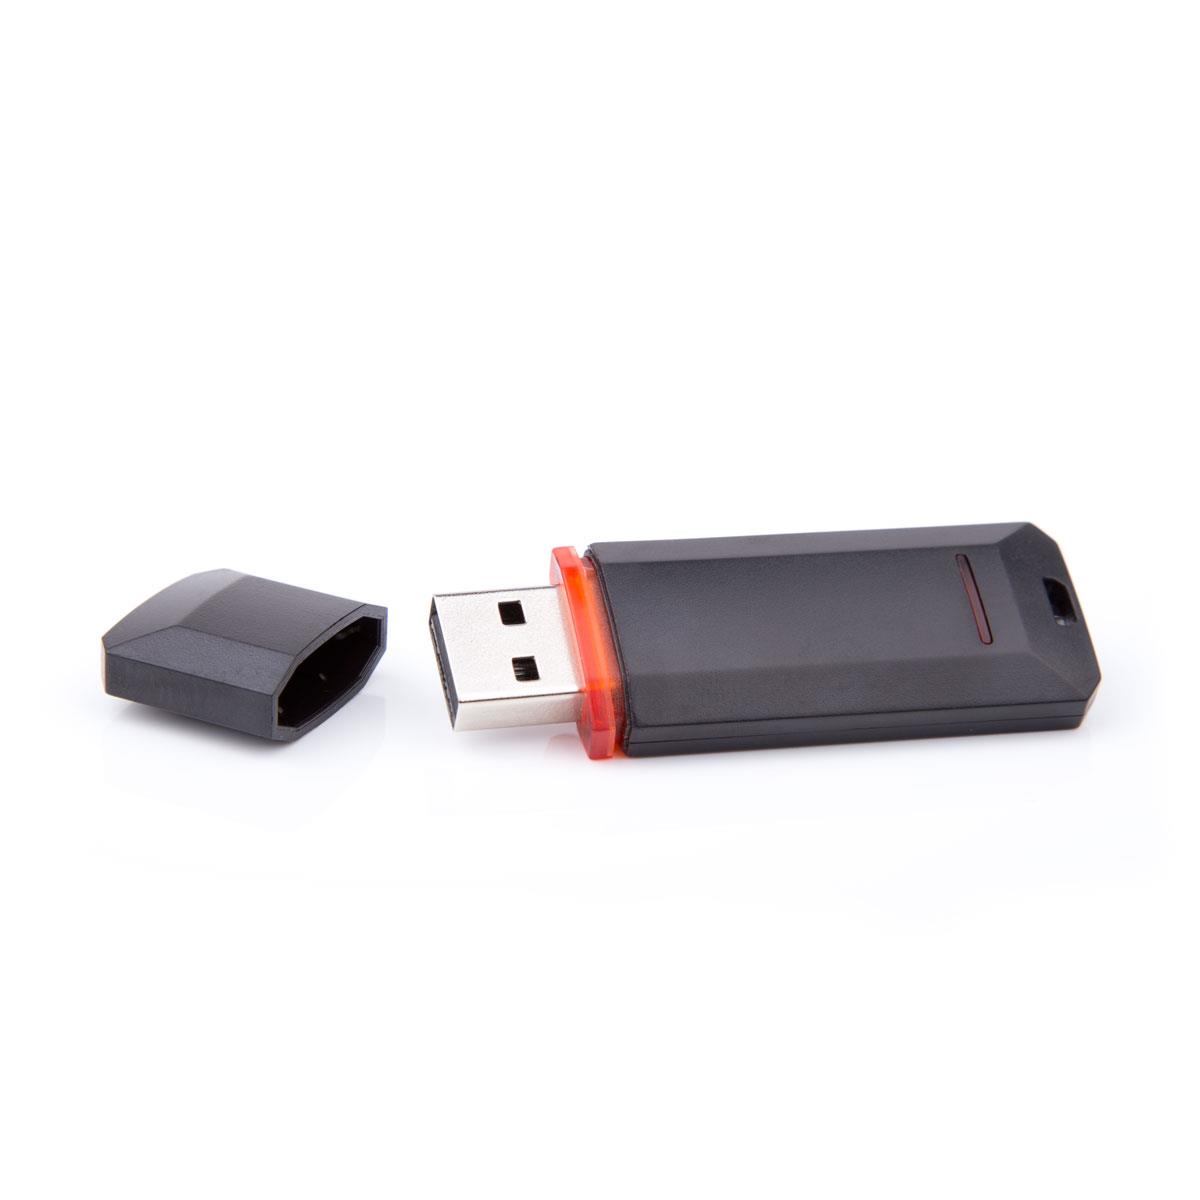 USB Stick Space 512 MB